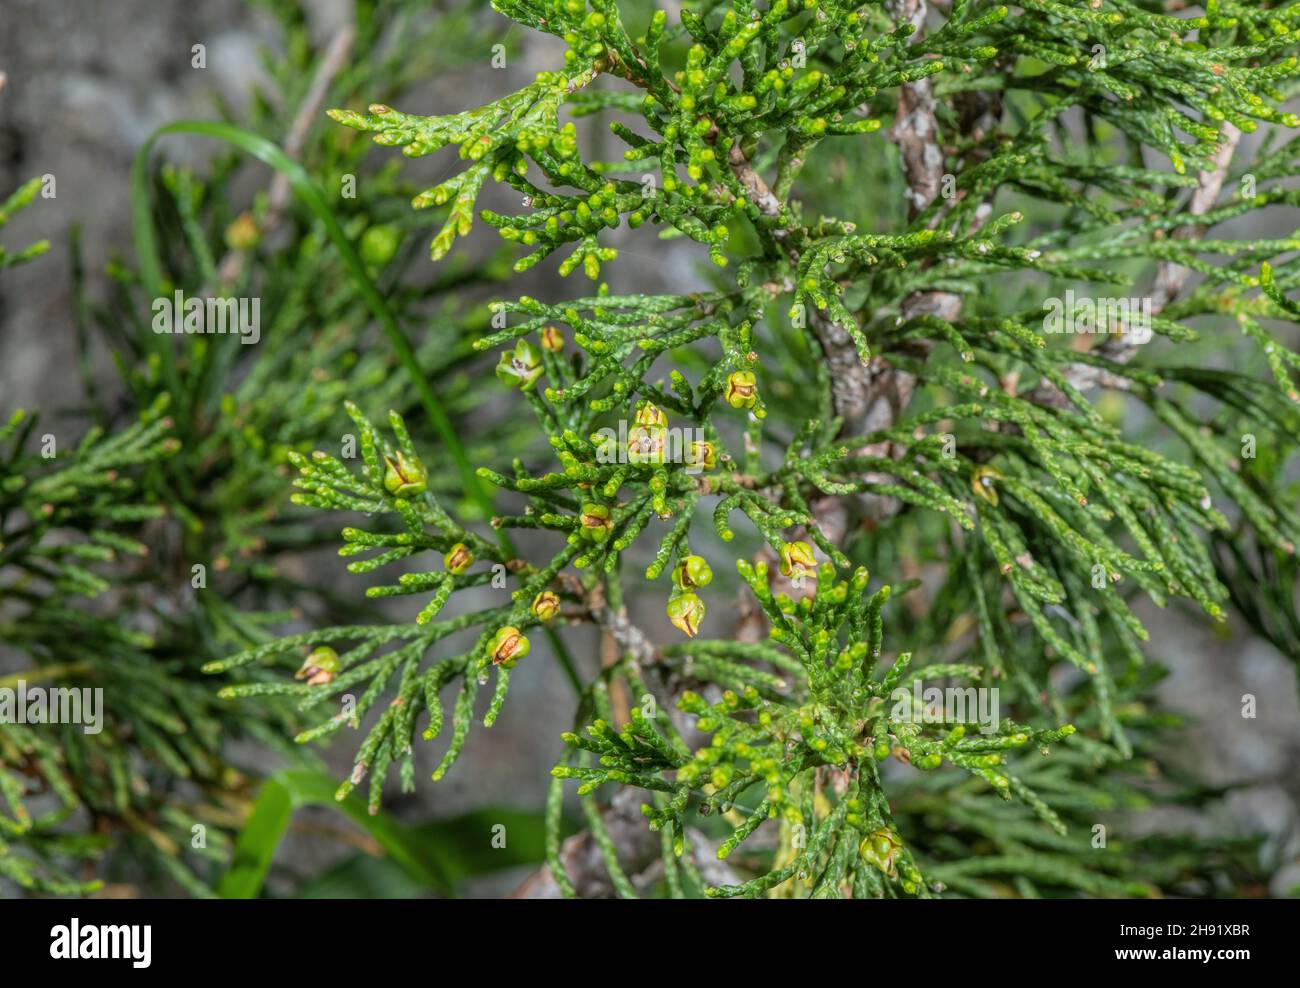 Savin juniper, Juniperus sabina, showing needles and cones. French Alps. Stock Photo